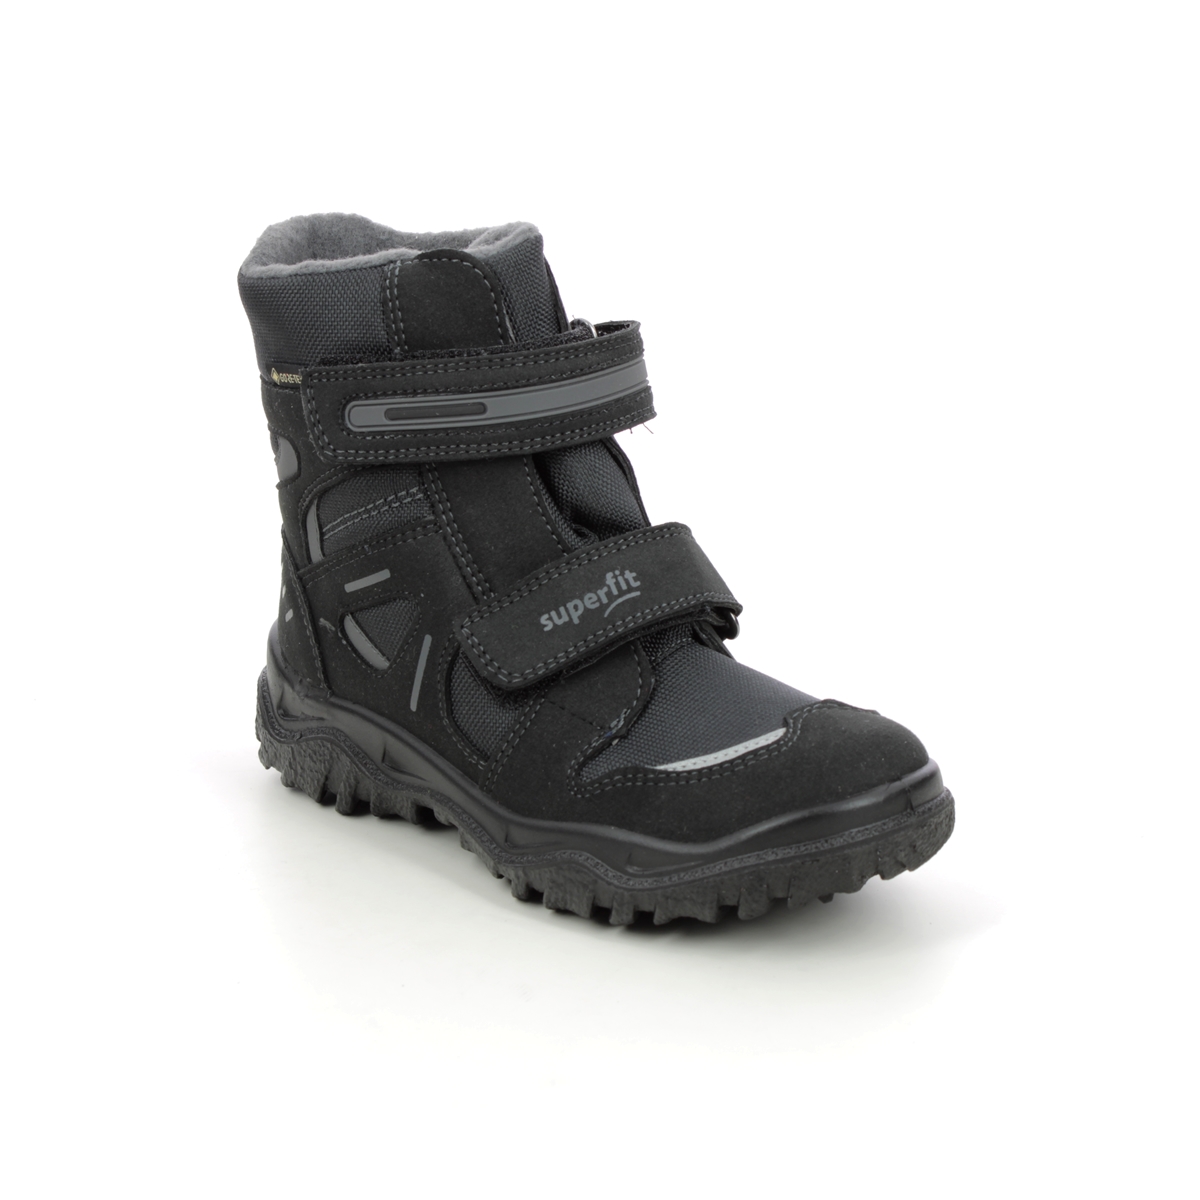 Superfit Husky Jnr Gore Black Kids Boys Boots 0809080-0600 In Size 34 In Plain Black For kids